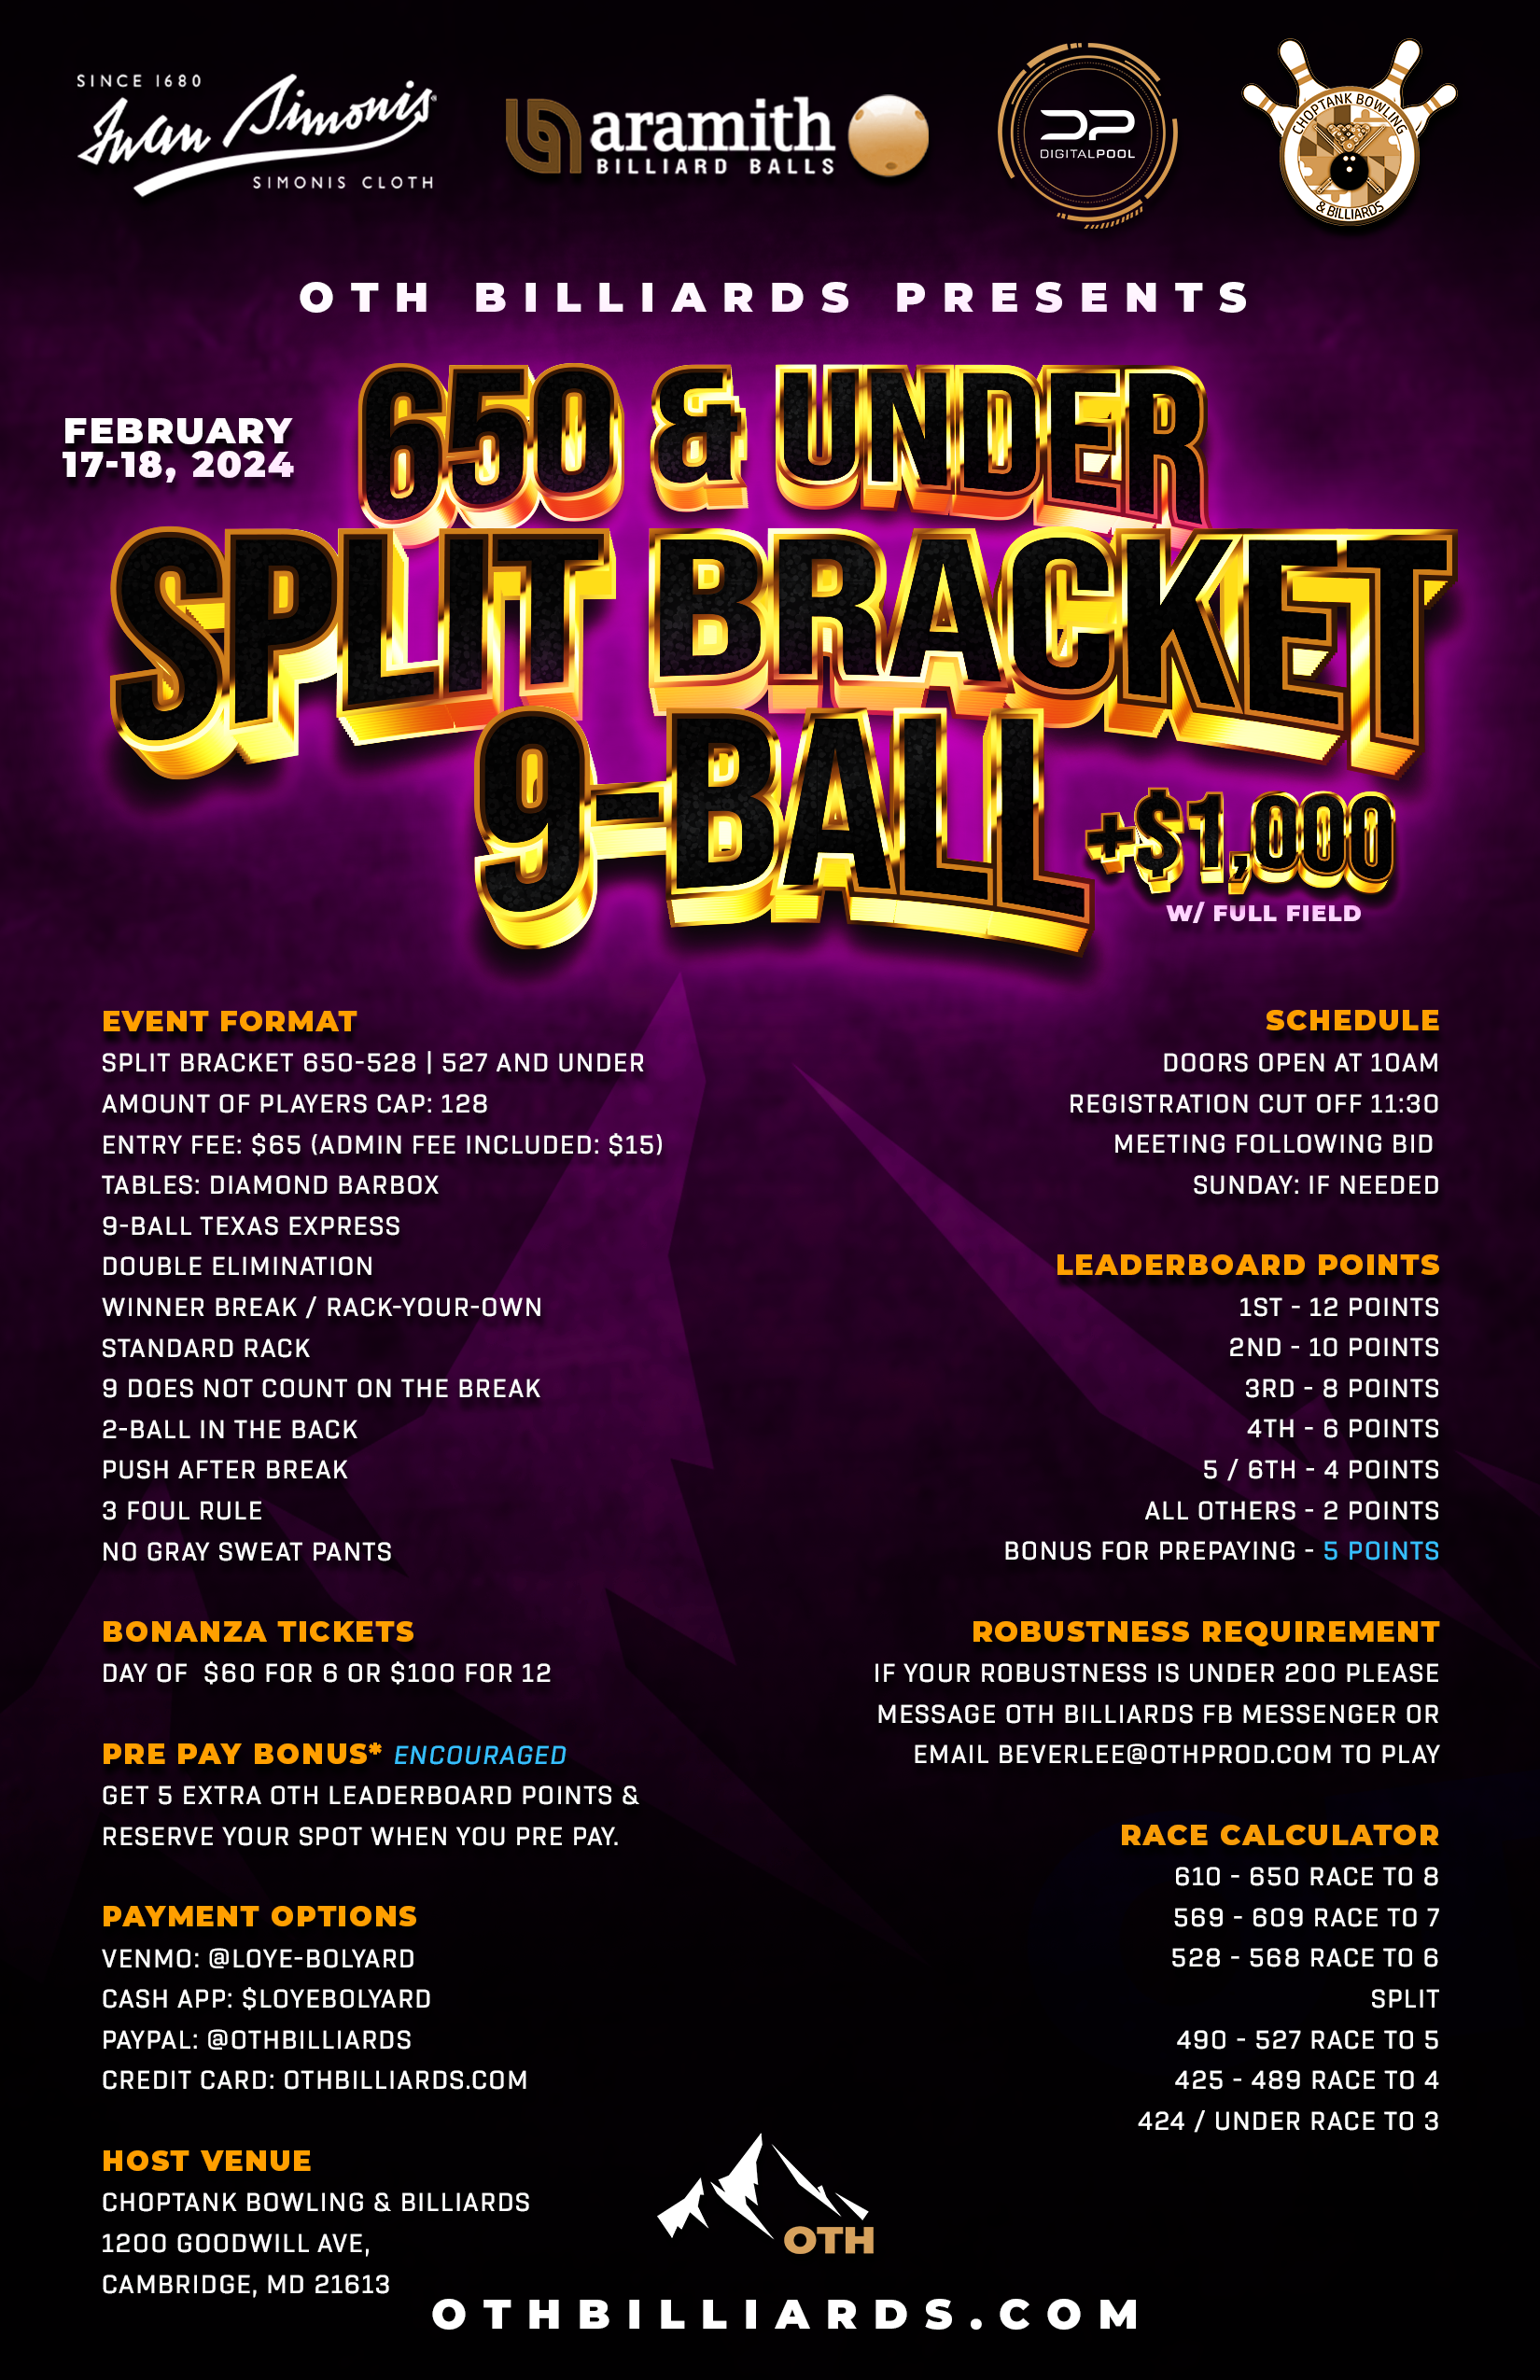 Feb 17/18 - Split Bracket 9-Ball +$1,000